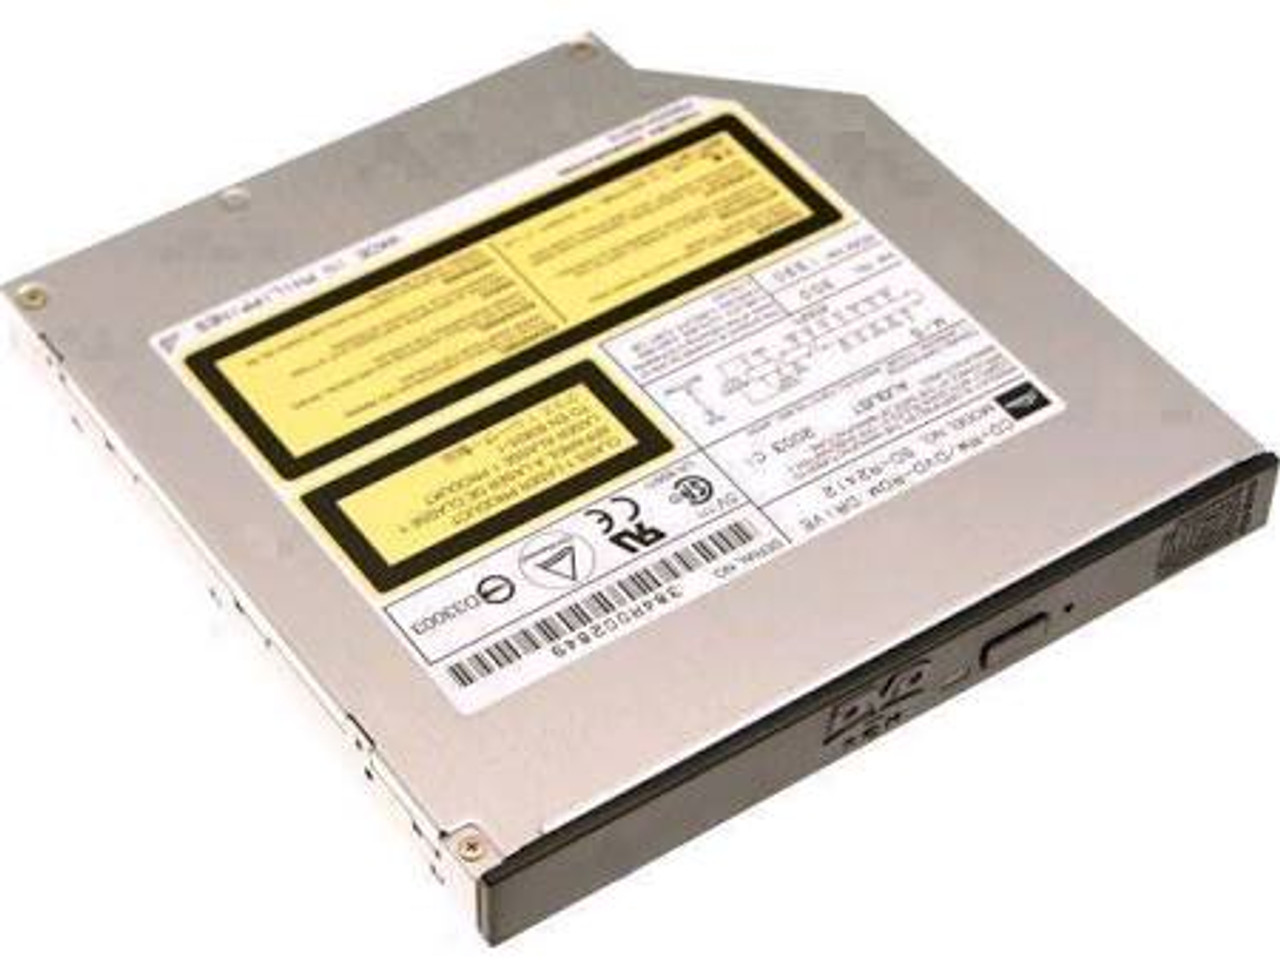 K000015790 - Toshiba K000015790 Plug-in Module CD/dvd Combo Drive - CD-RW/dvd-ROM Support - IDE